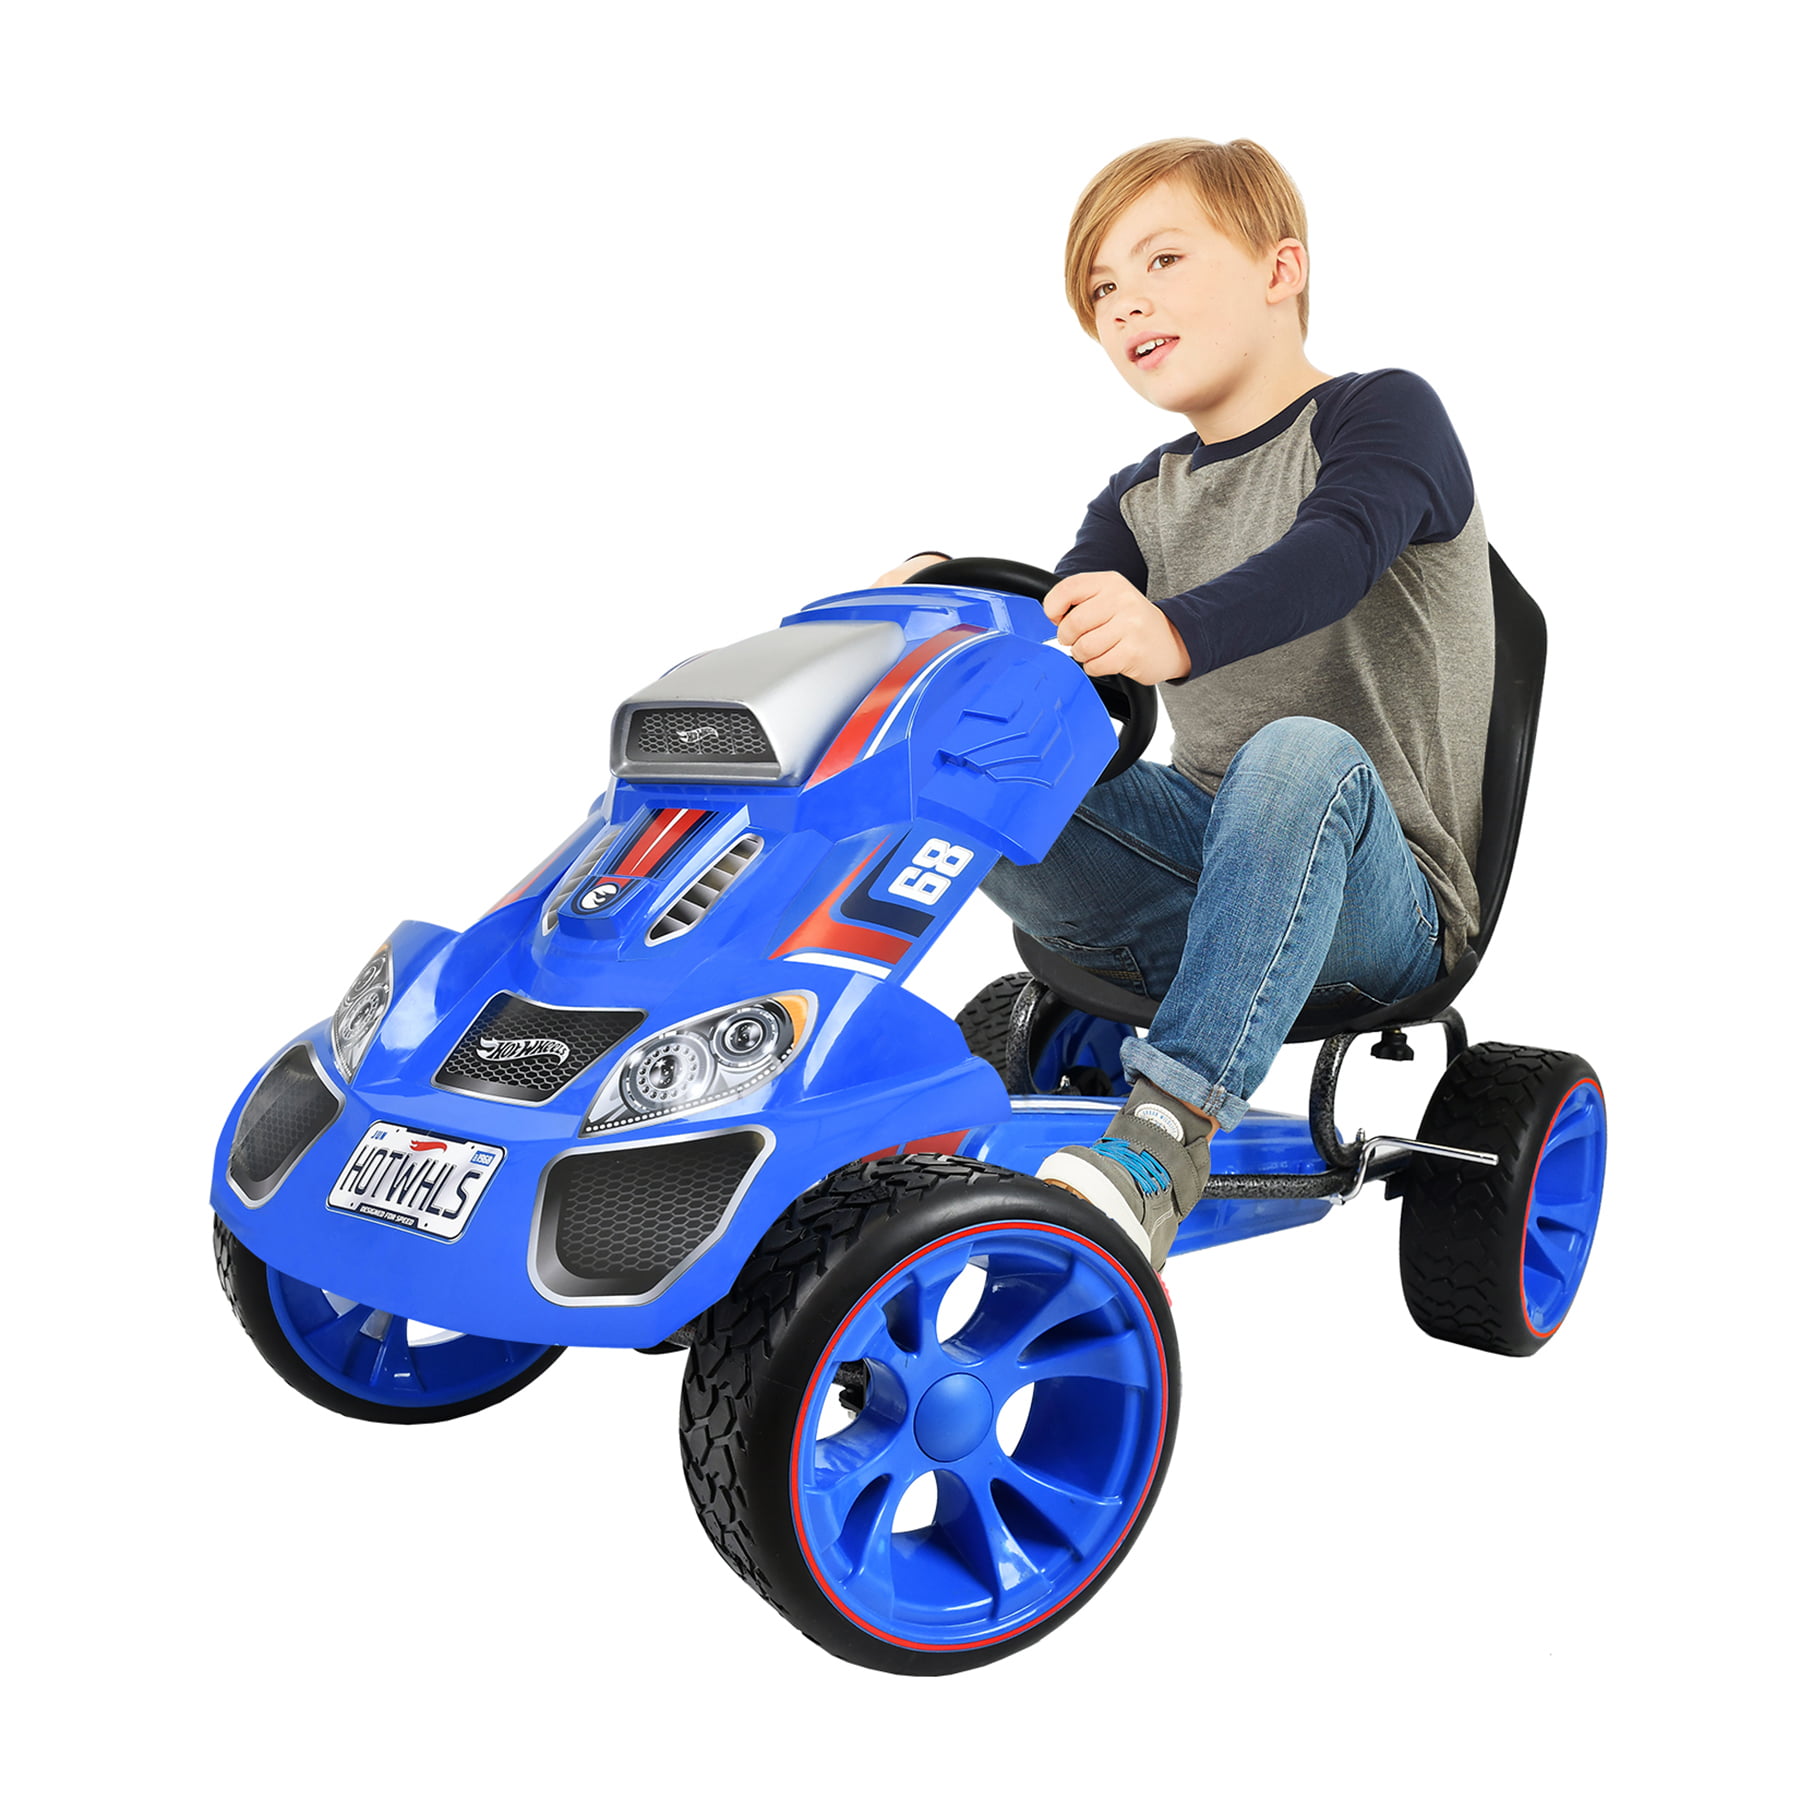 Hot Wheels XL Pedal Go Kart Ride On - Blue 